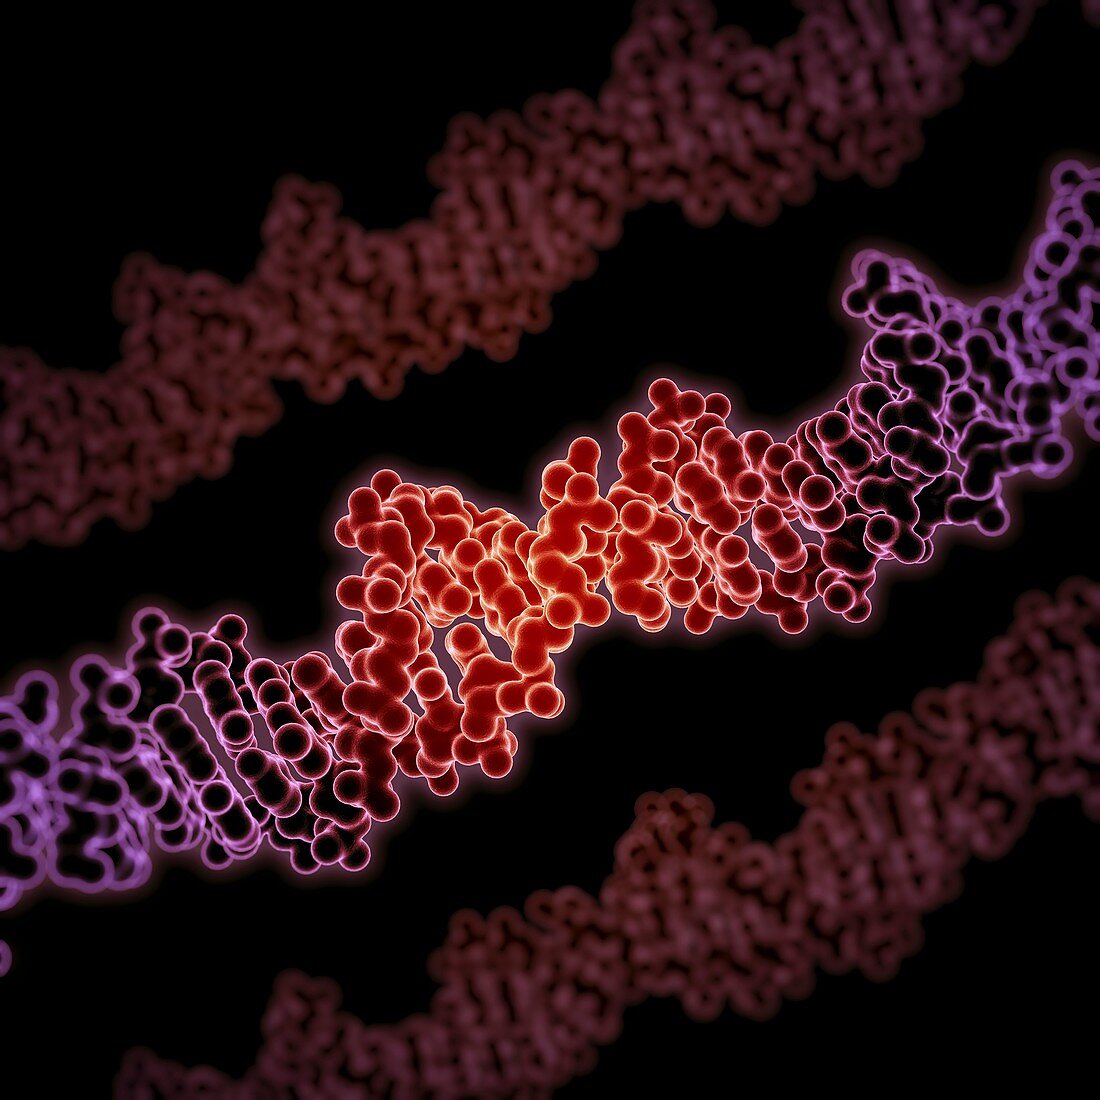 Human DNA, artwork